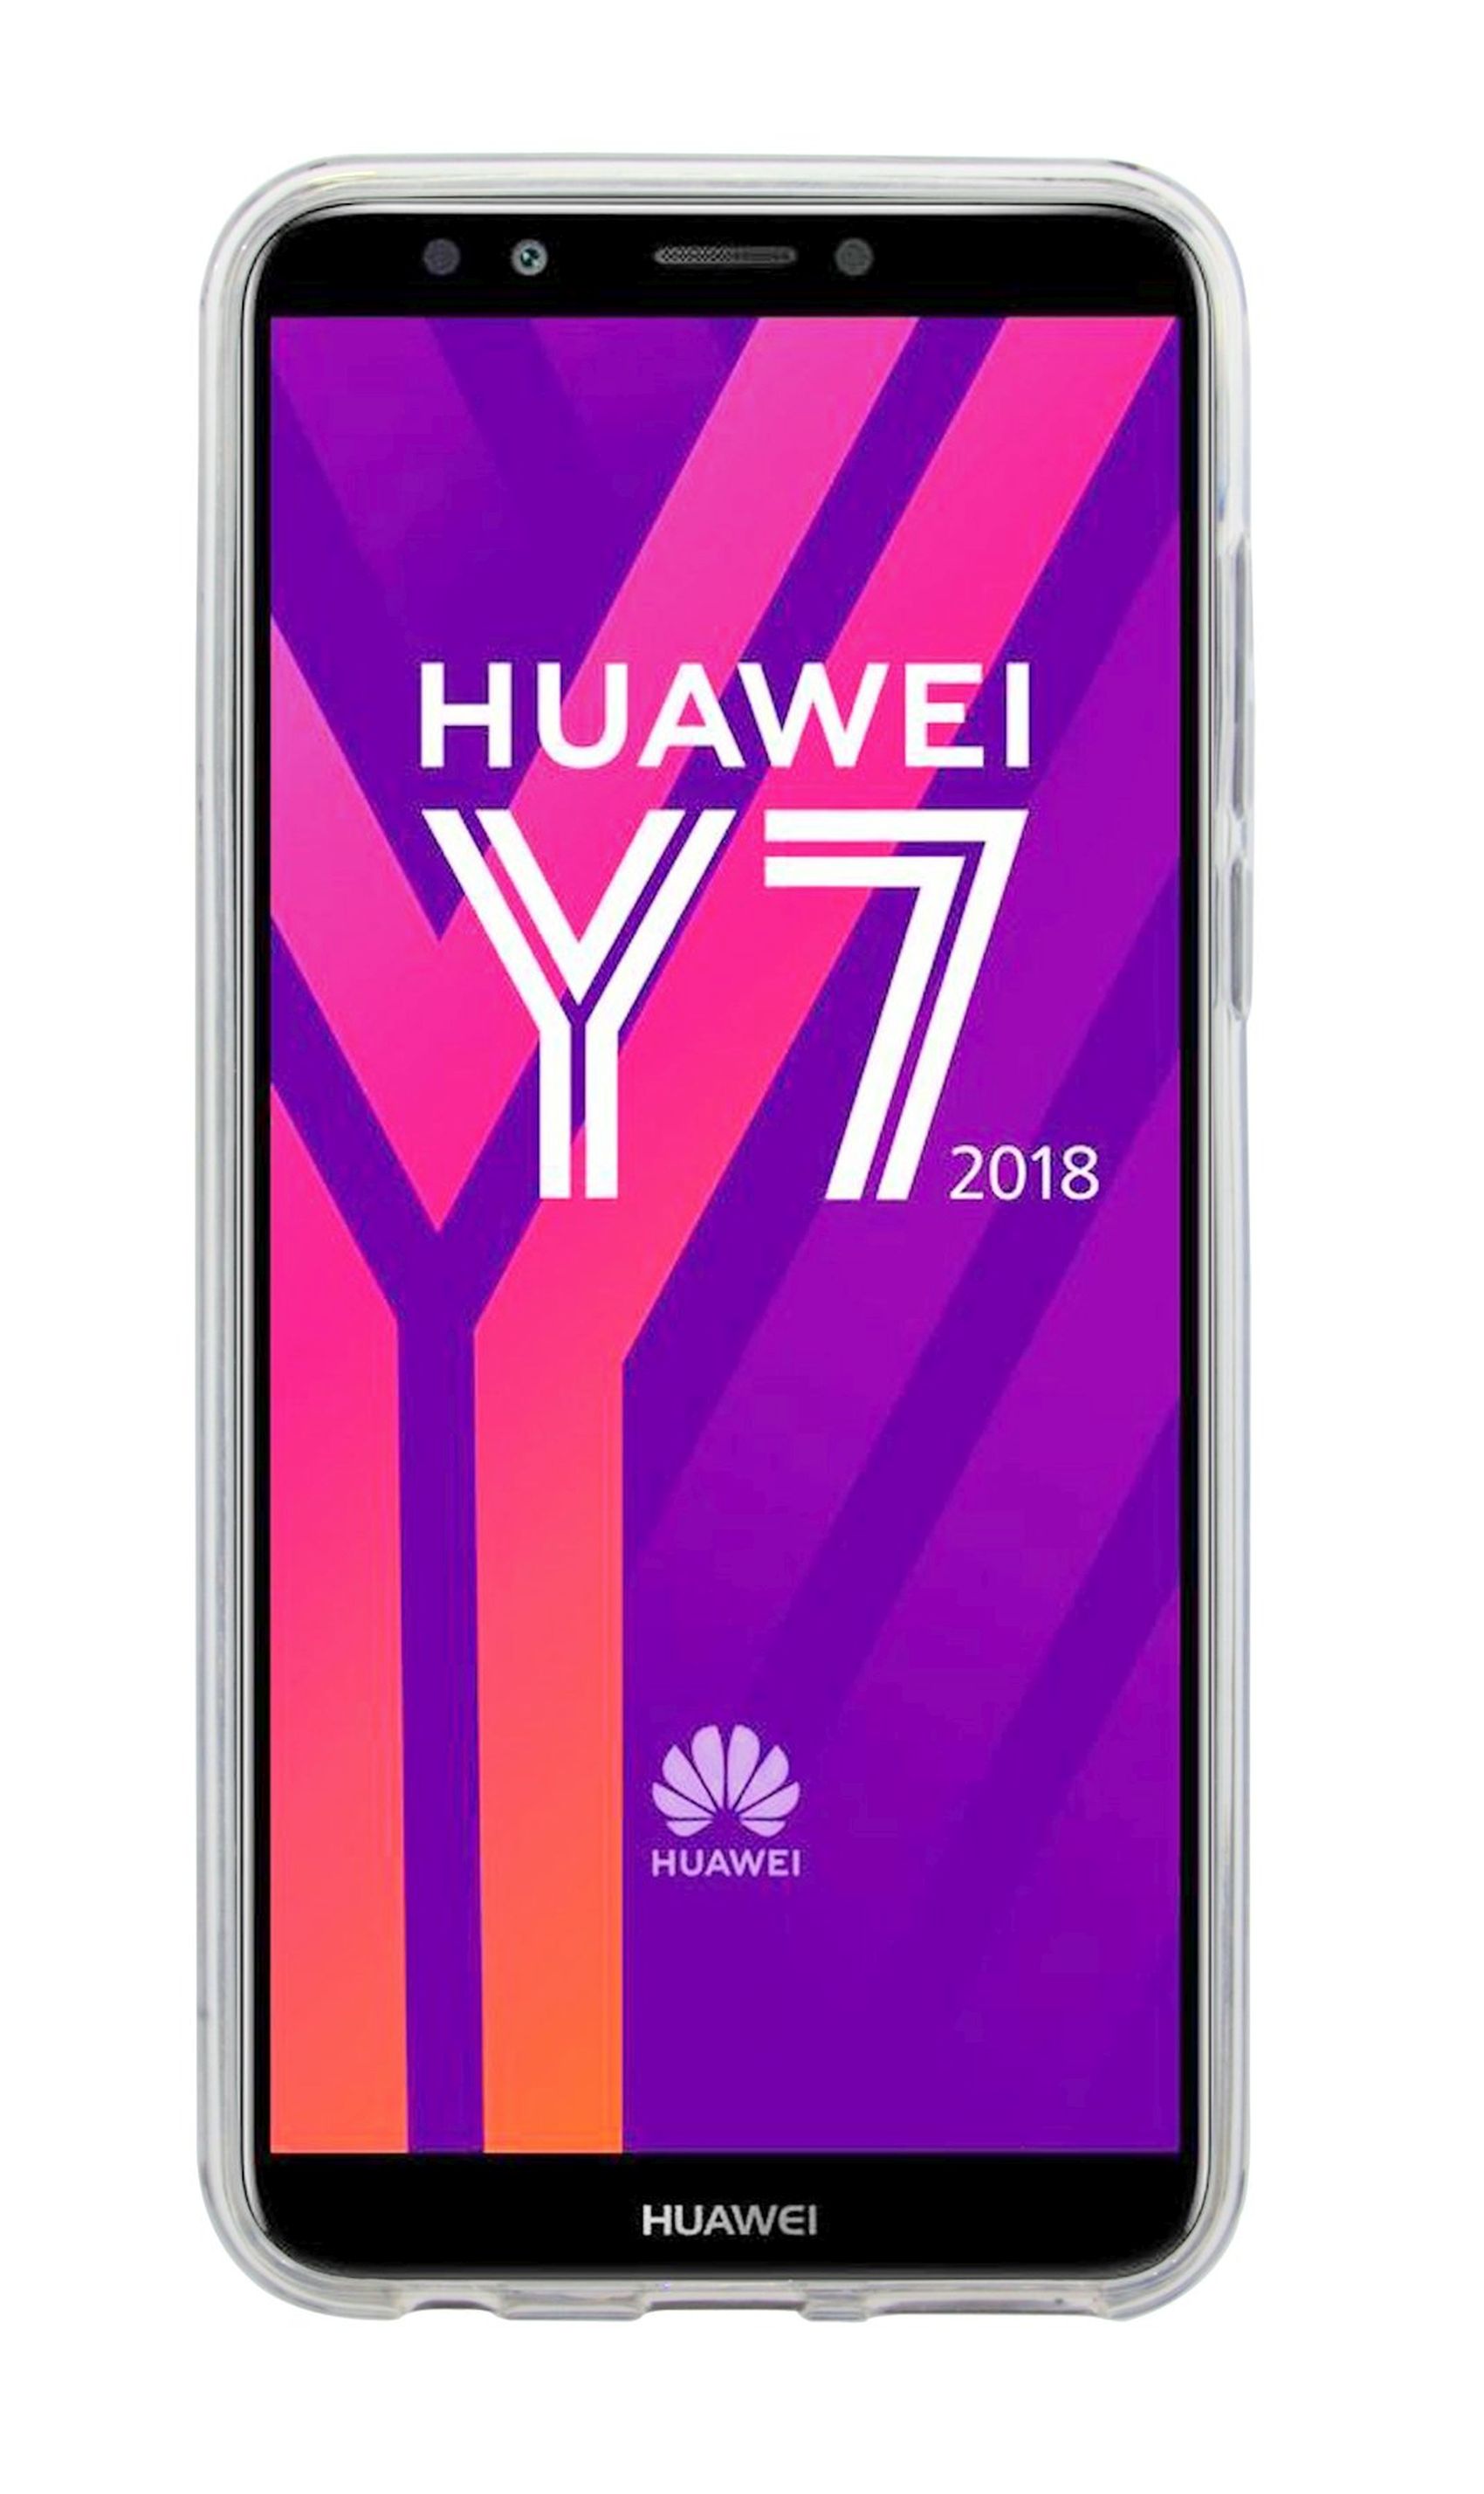 COFI S-Line Cover, Bumper, Y7 Transparent Huawei, Prime 2018